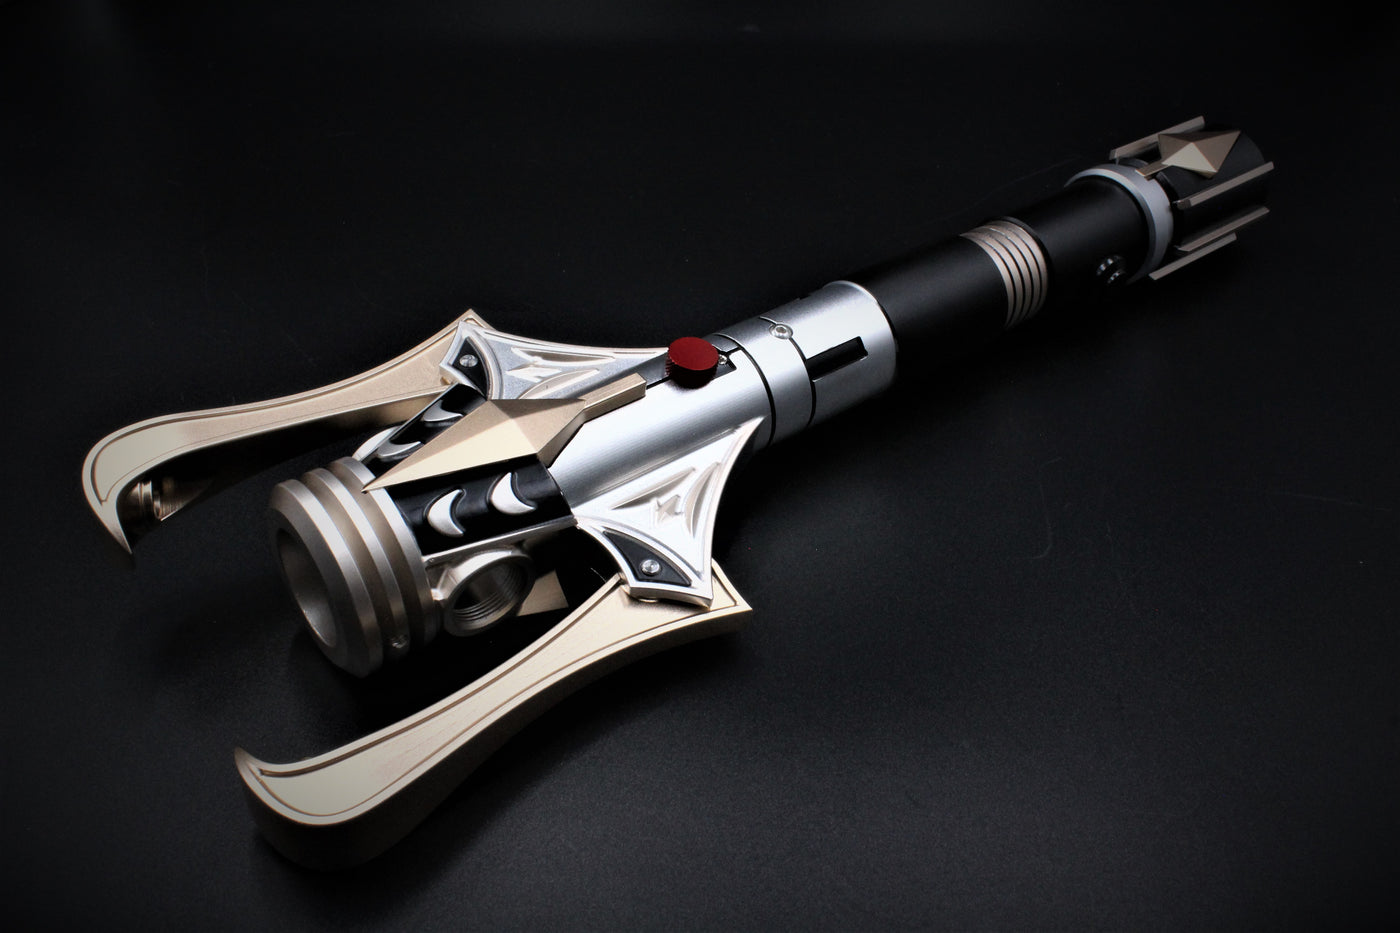 Voice of Reason - KenJo Sabers - Star Wars Lightsaber replica Jedi Sith - Best sabershop Europe - Nederland light sabers kopen -